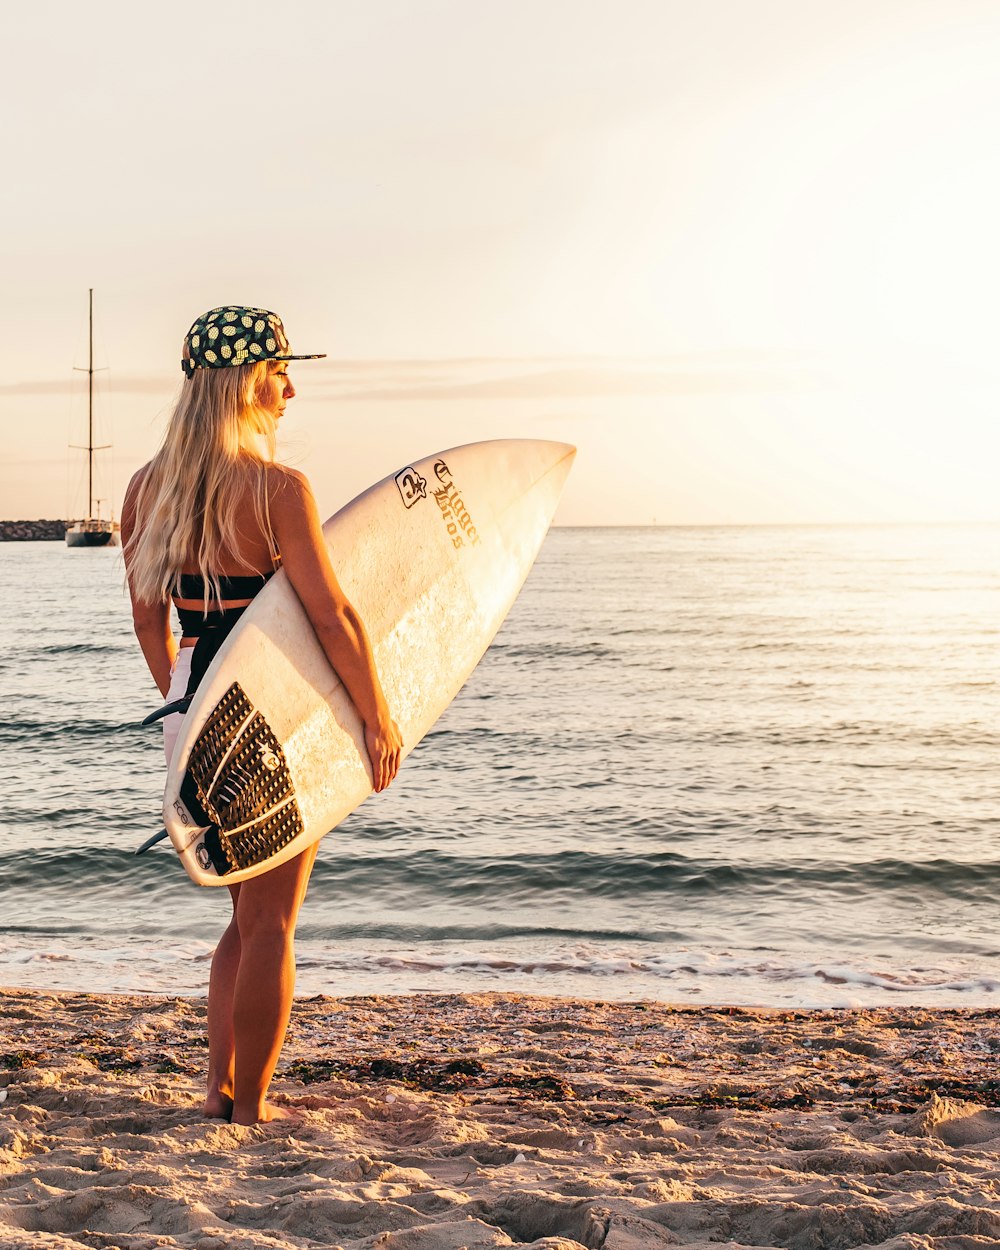 woman in black bikini holding surfboard standing on beach during daytime